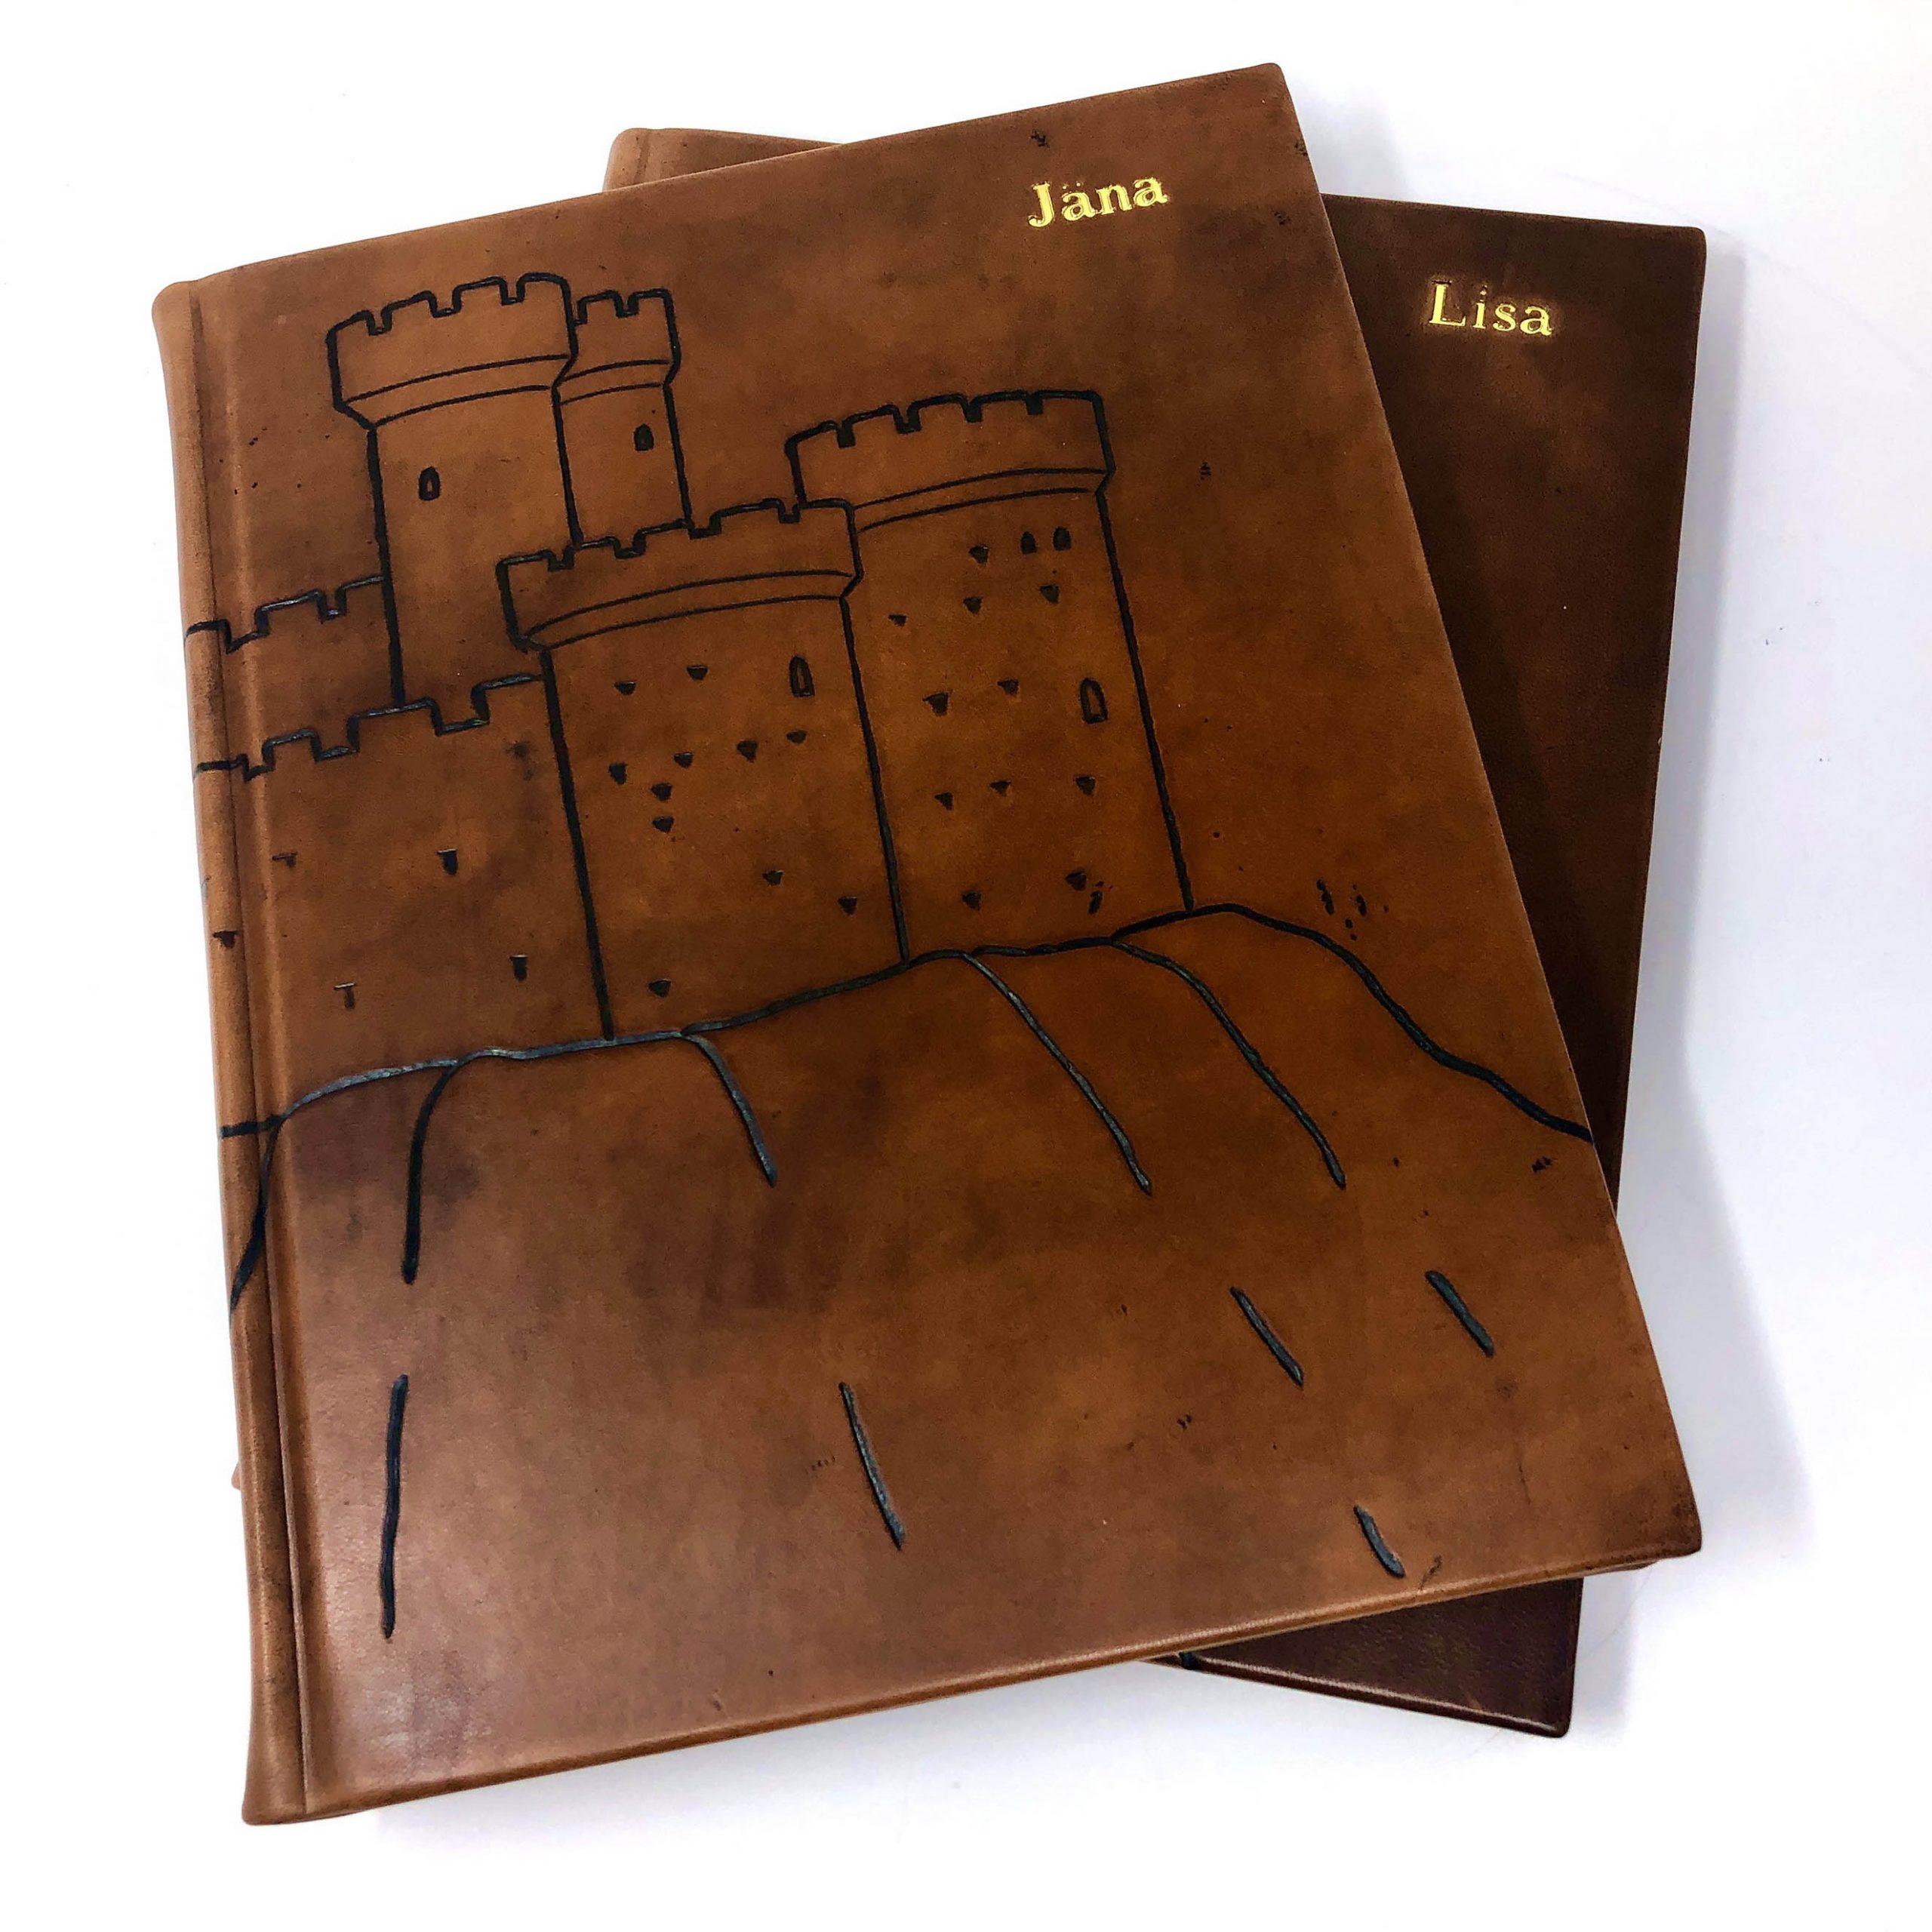 Exploring Ireland’s Castles by Tarquin Blake
Custom Leather Book
Boston Harbor Bookbindery
https://bostonharborbooks.com/